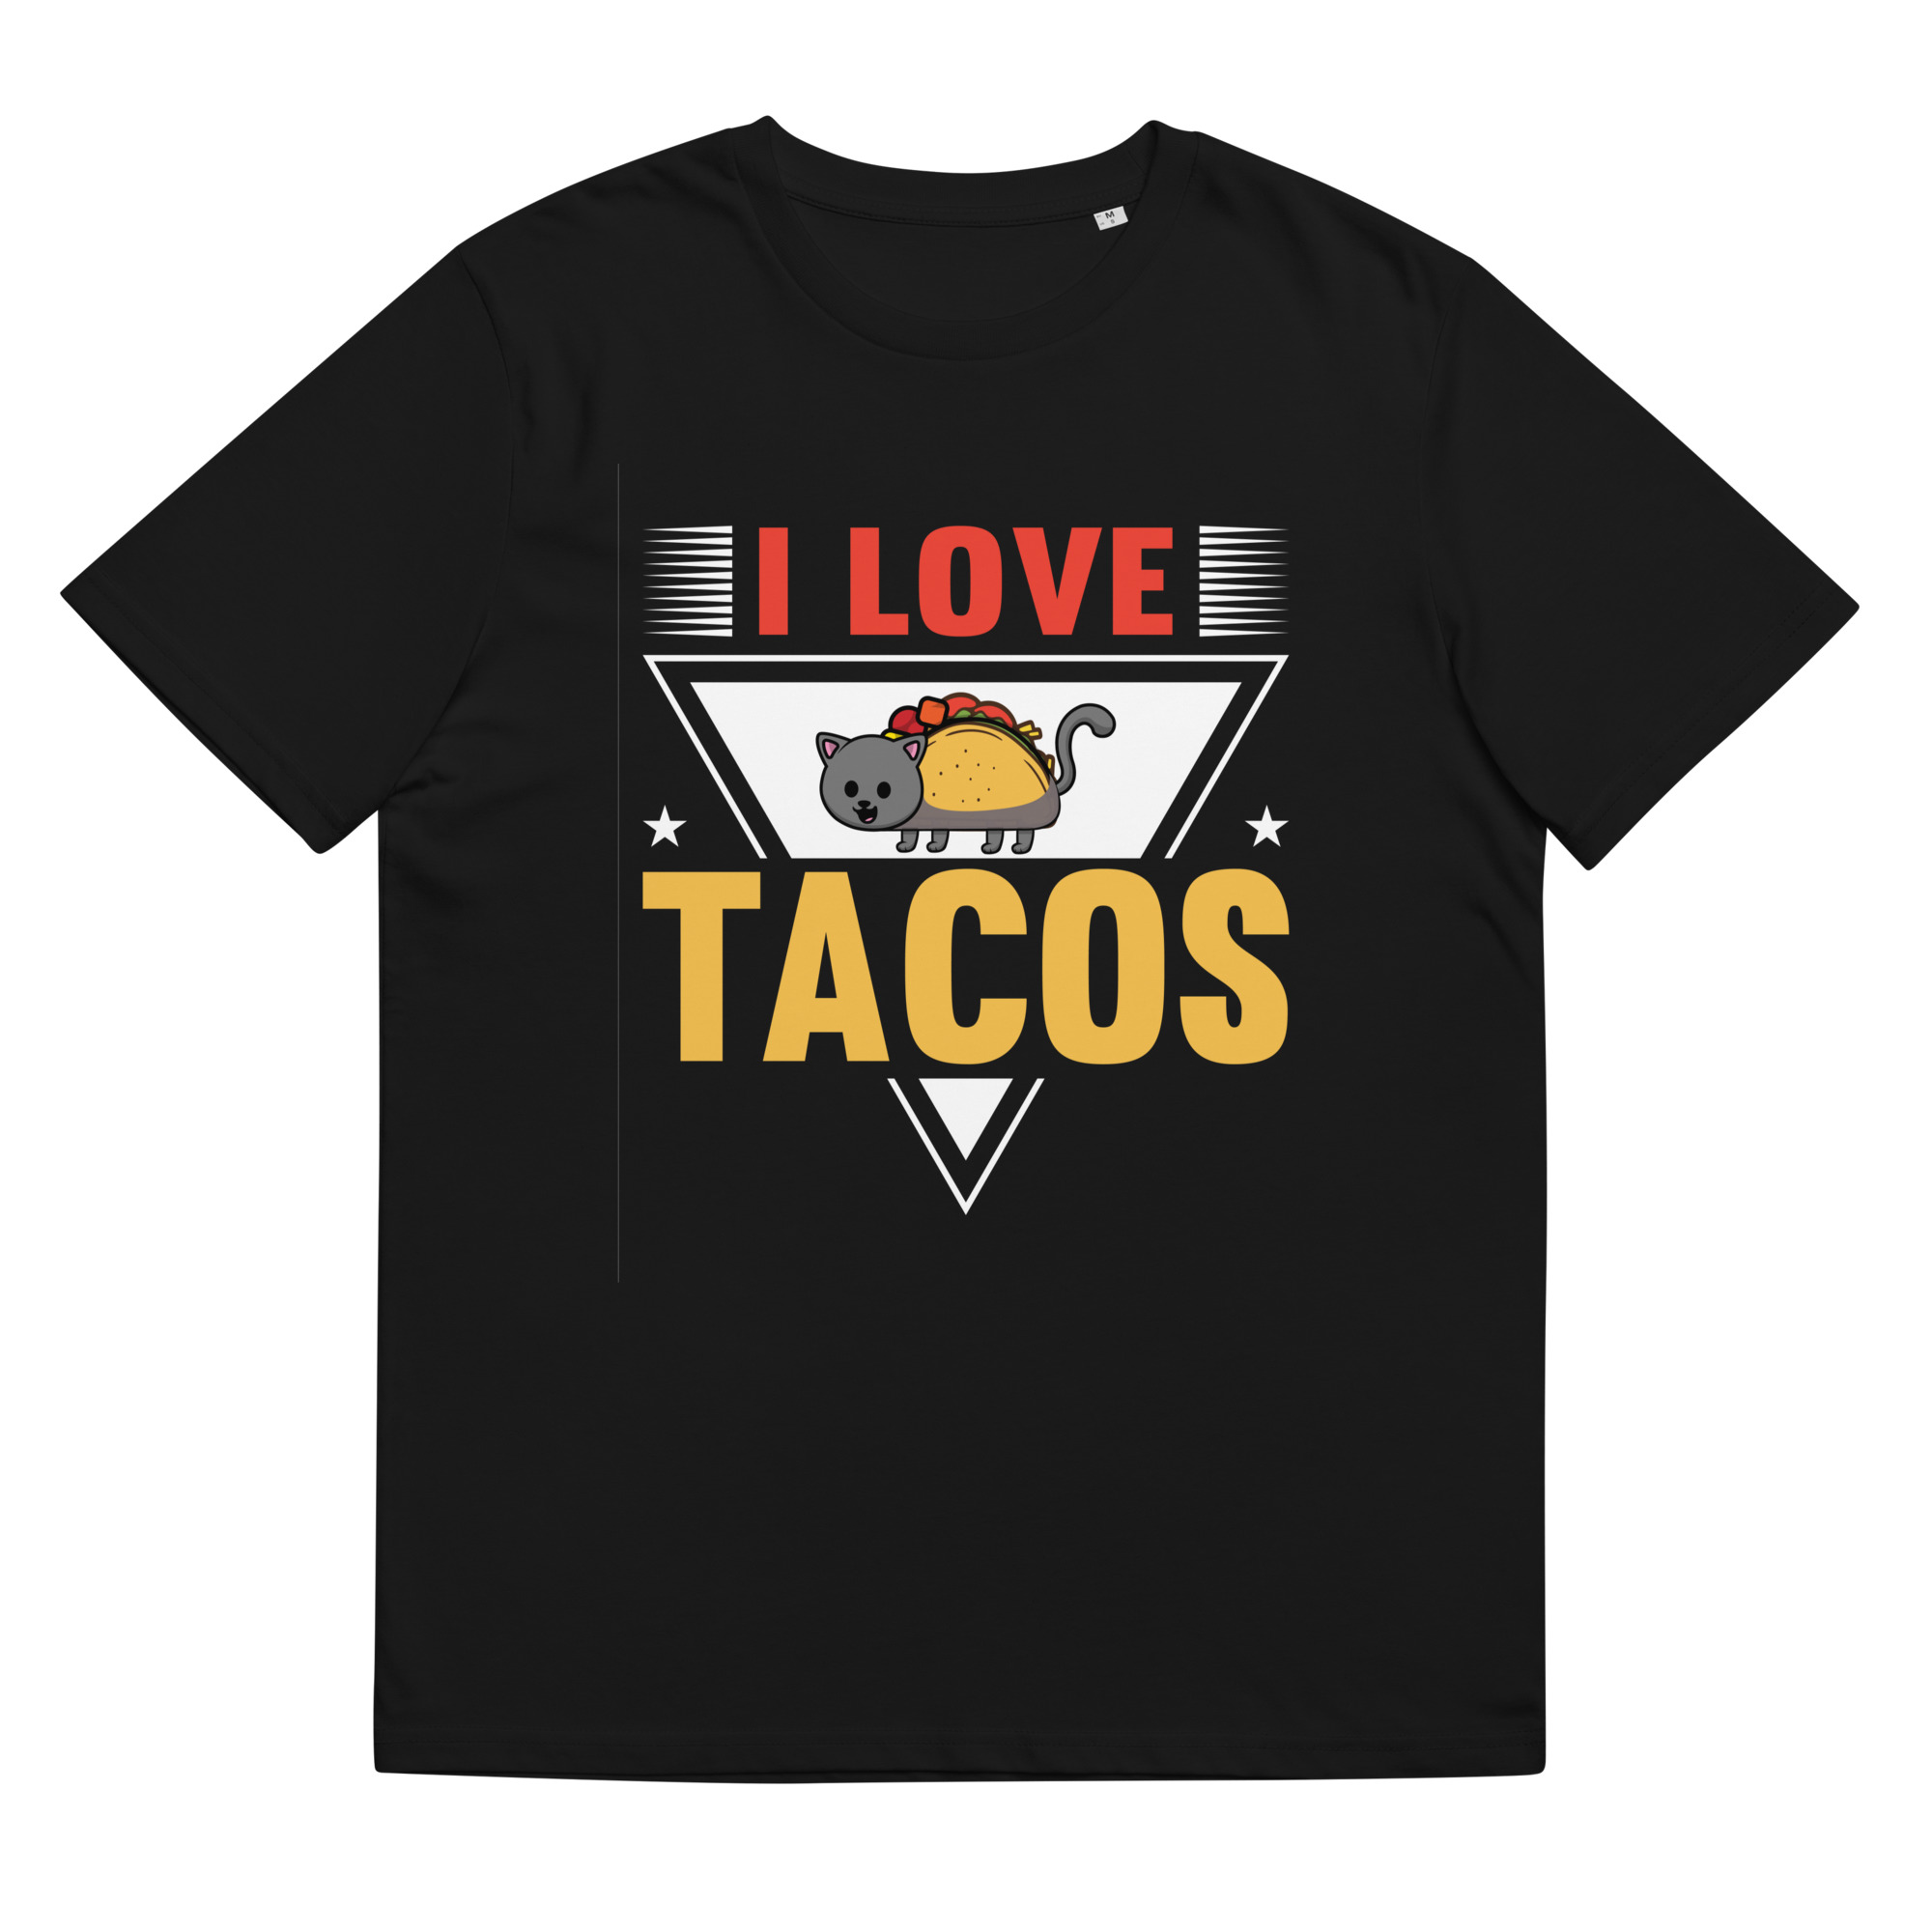 I Love Tacos And Cats - Organic Unisex Tacos T-Shirt